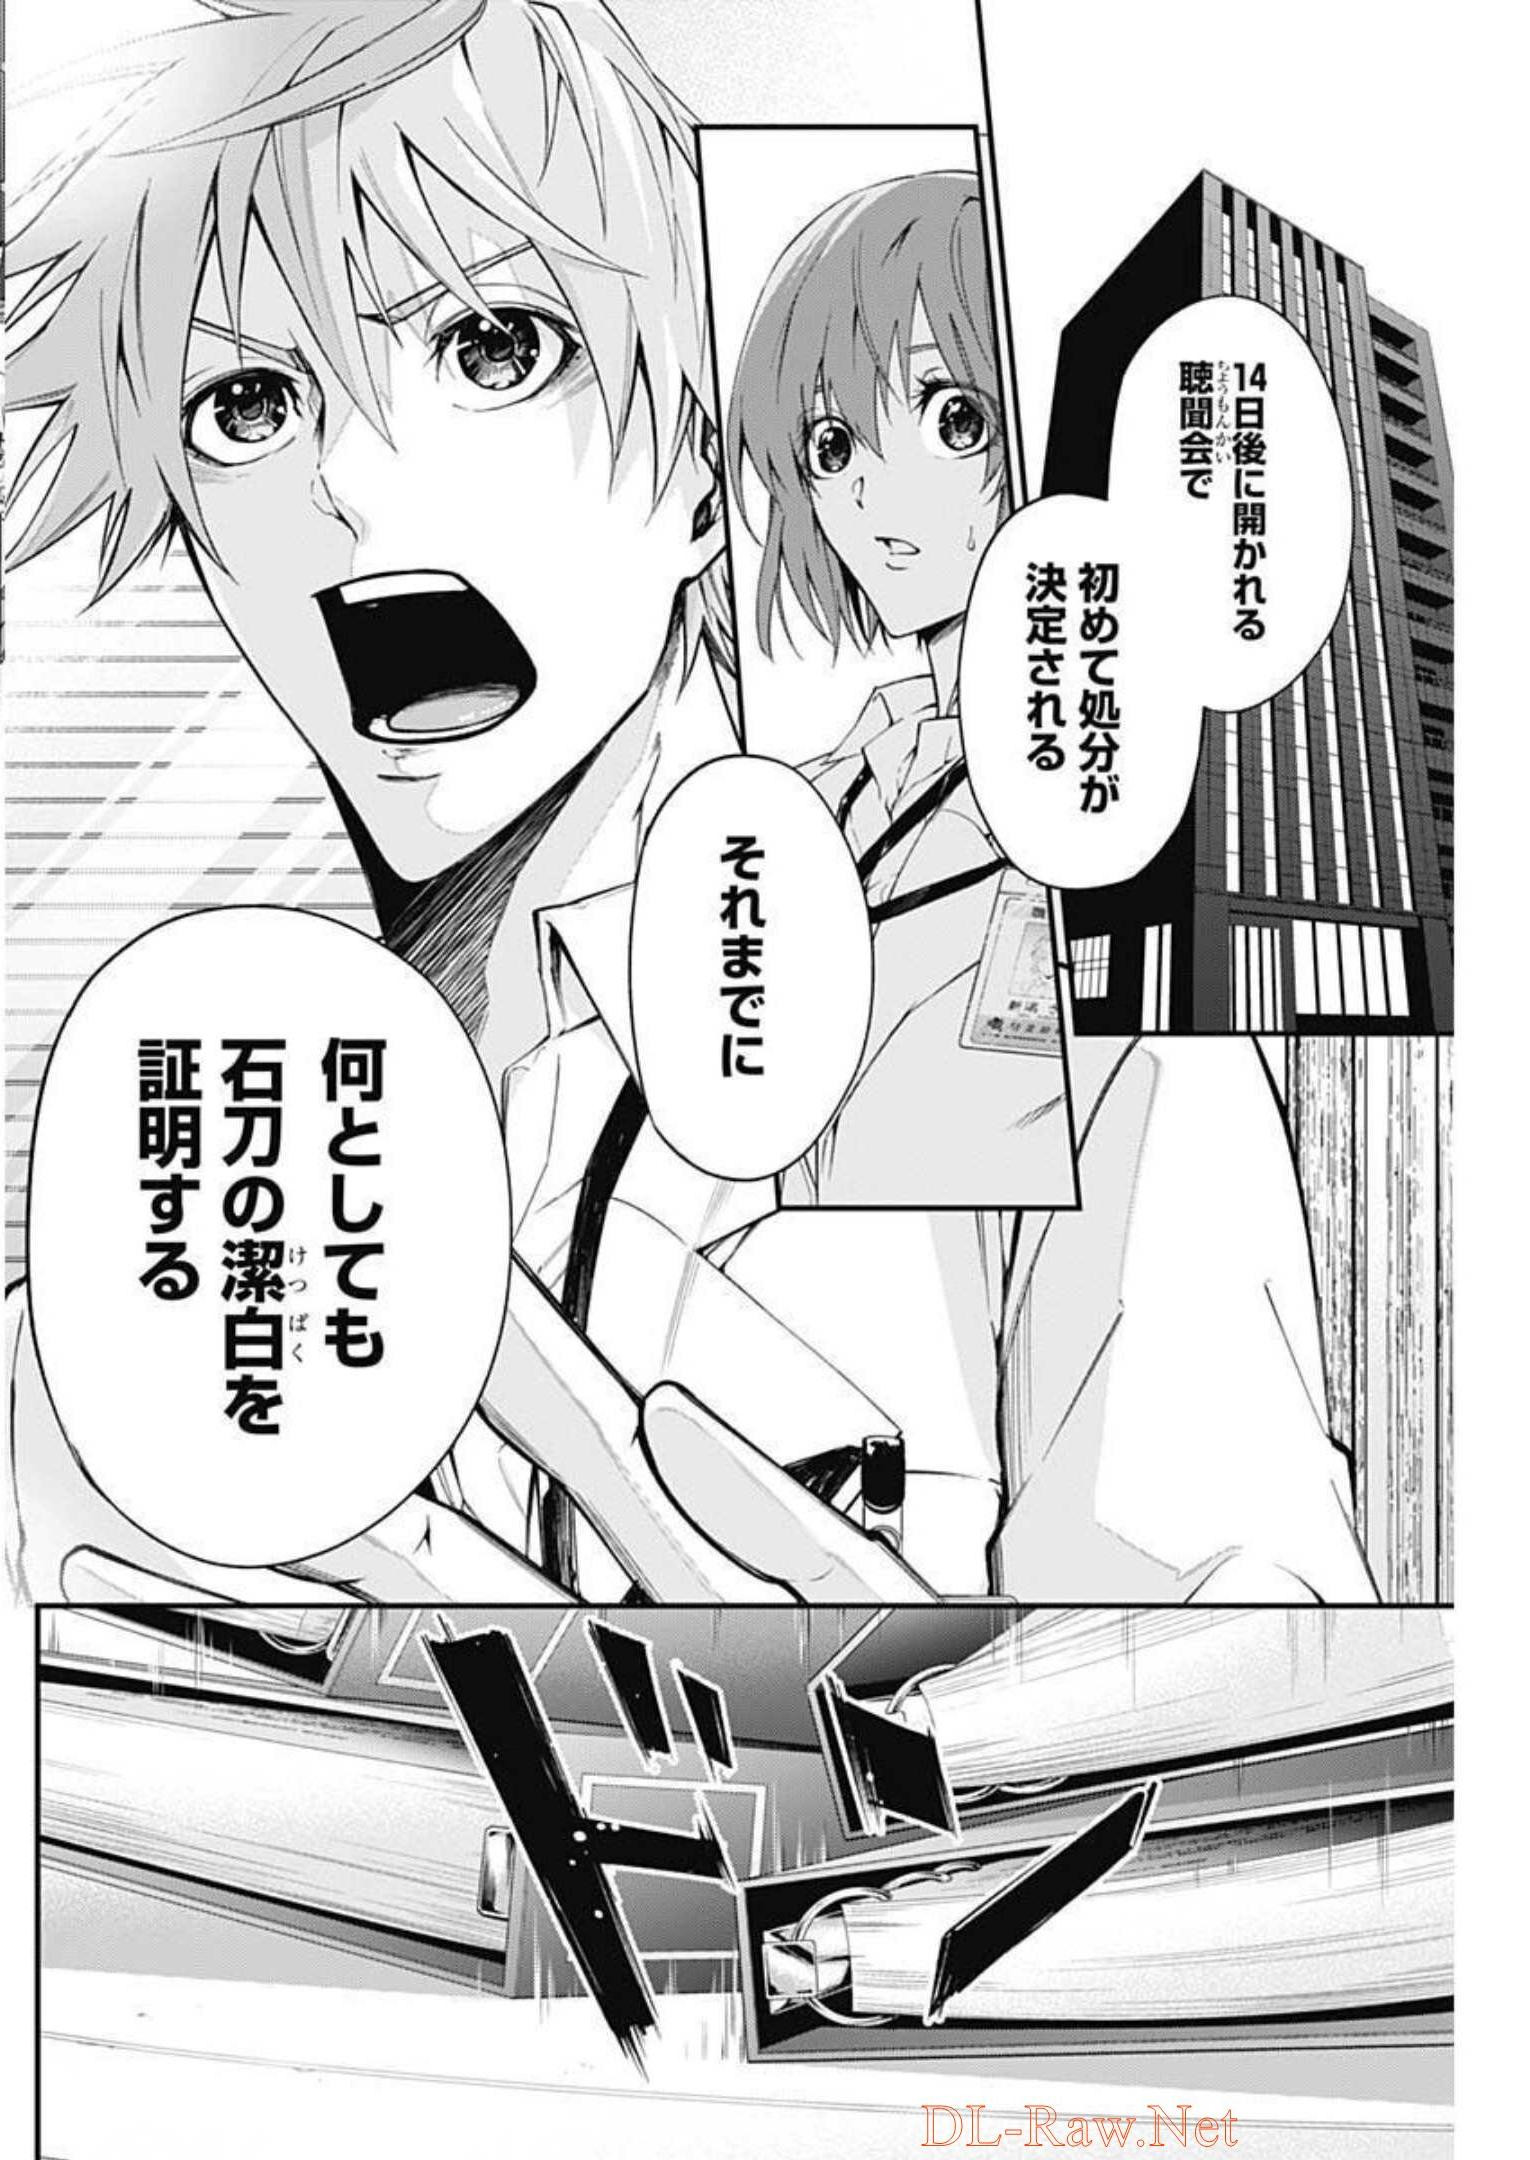 Doctor Zelos: Sports Gekai Nonami Yashiro no Jounetsu - Chapter 041 - Page 5